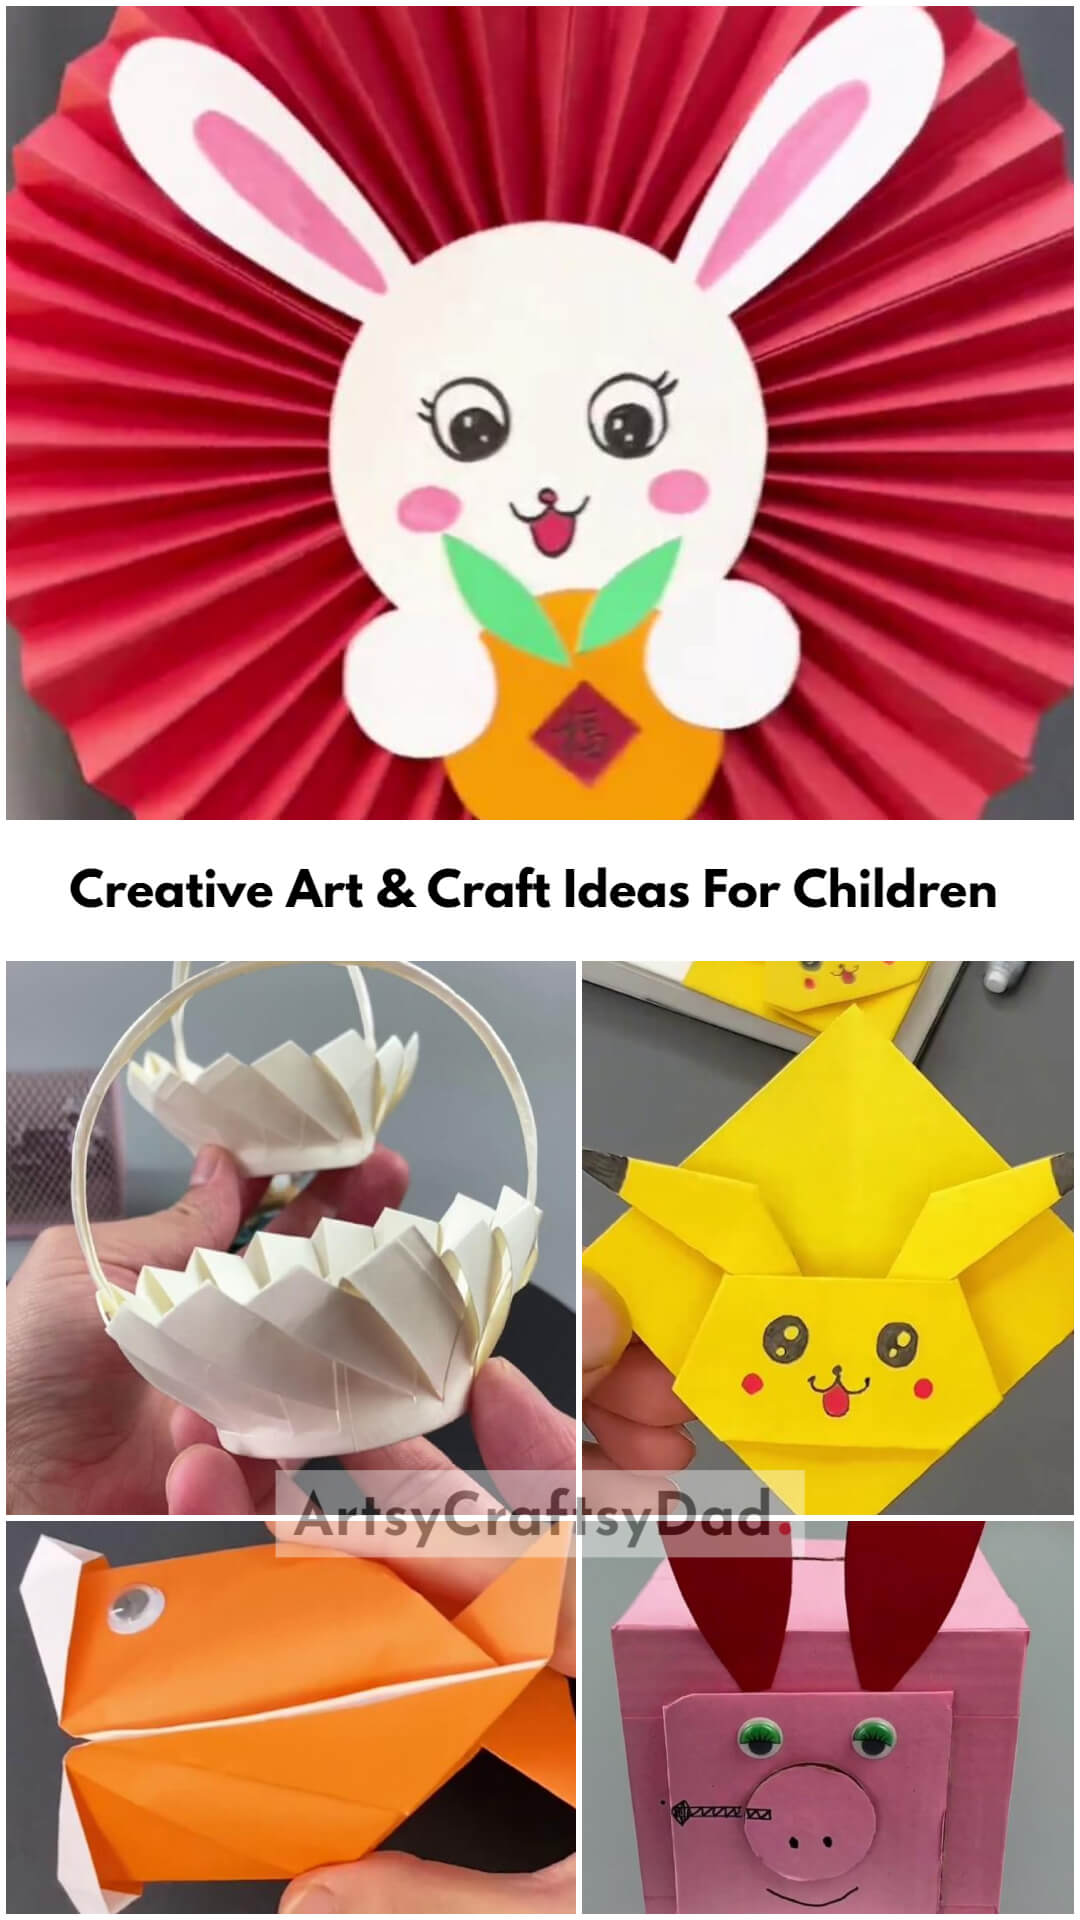 Creative Art & Craft Ideas For Children